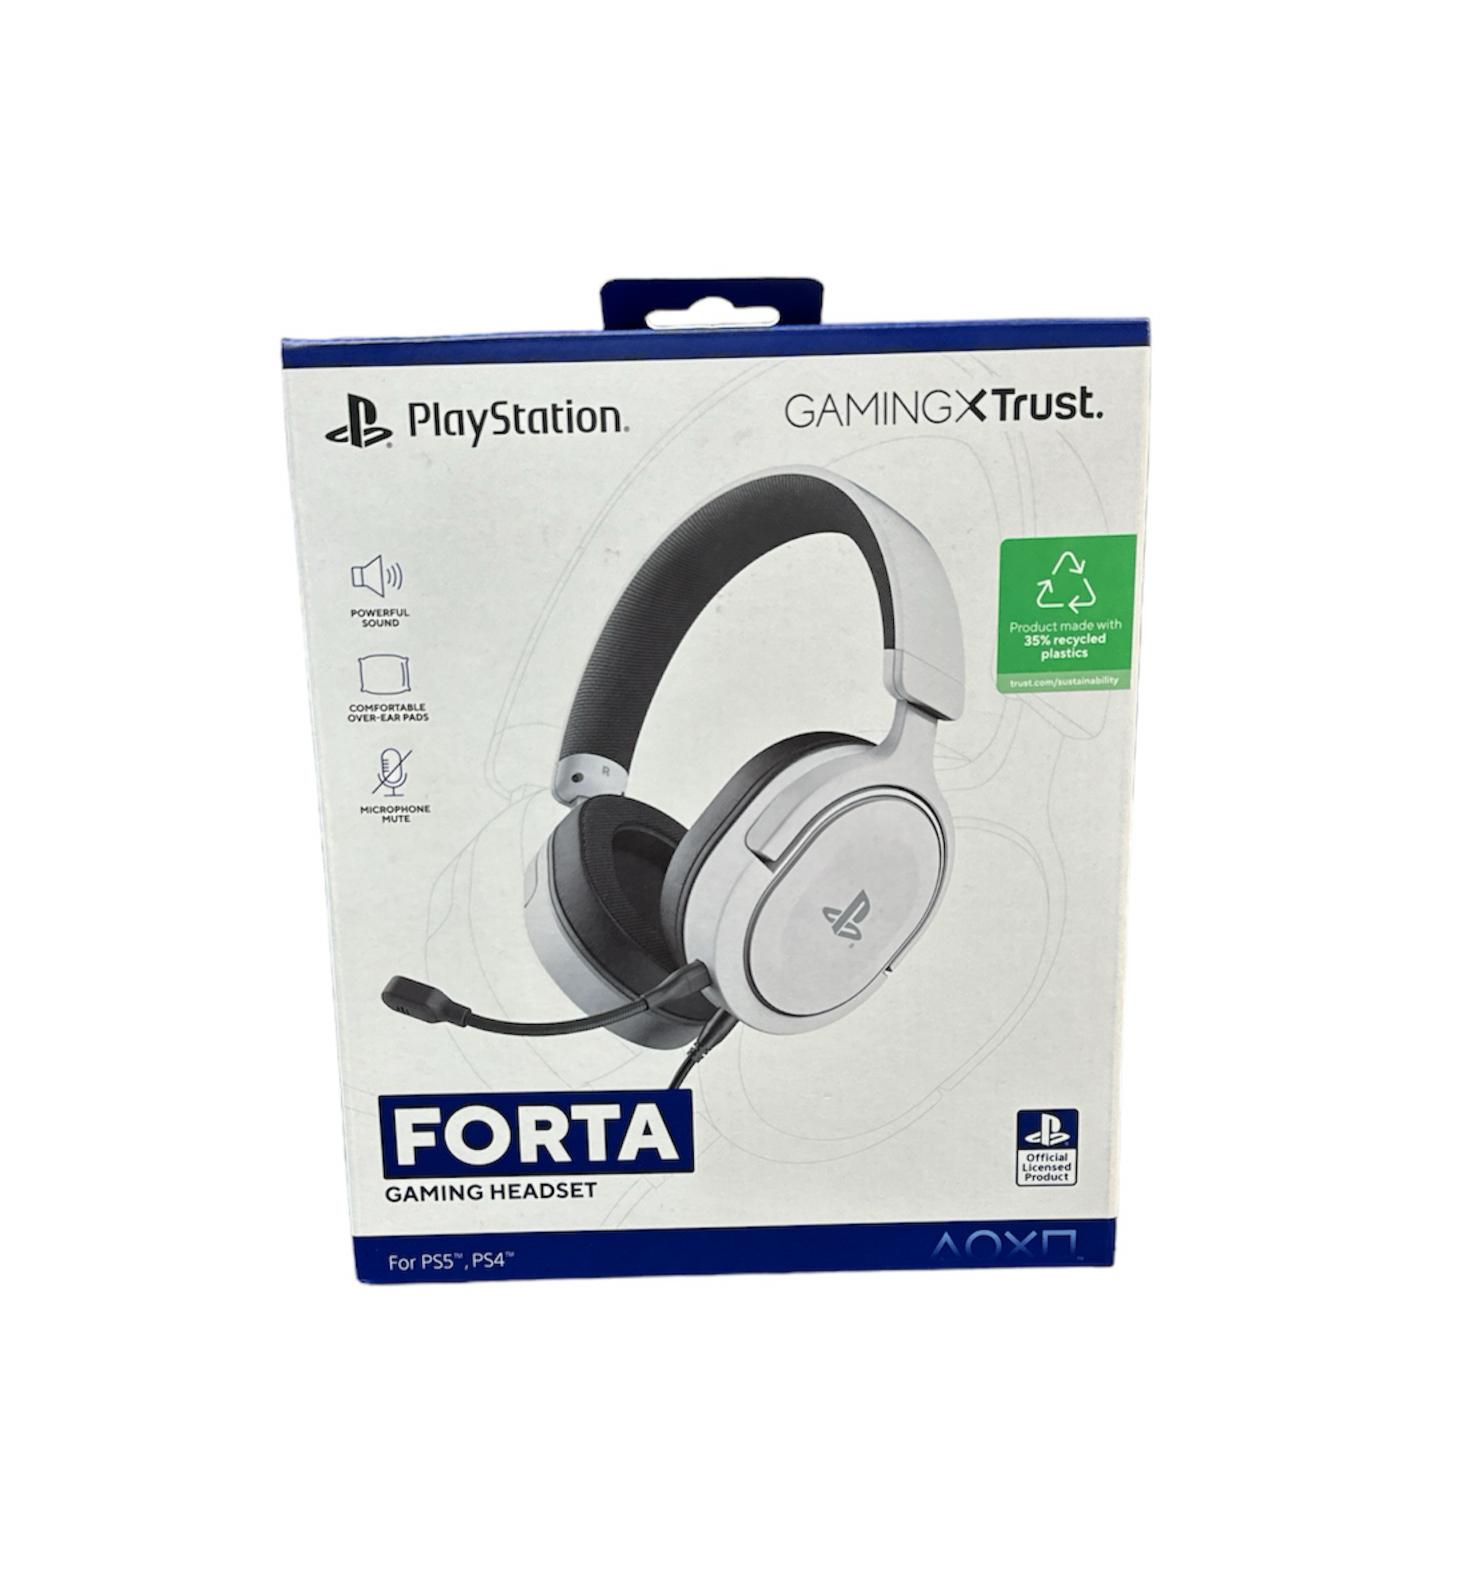 Forta Playstation Gaming Headset